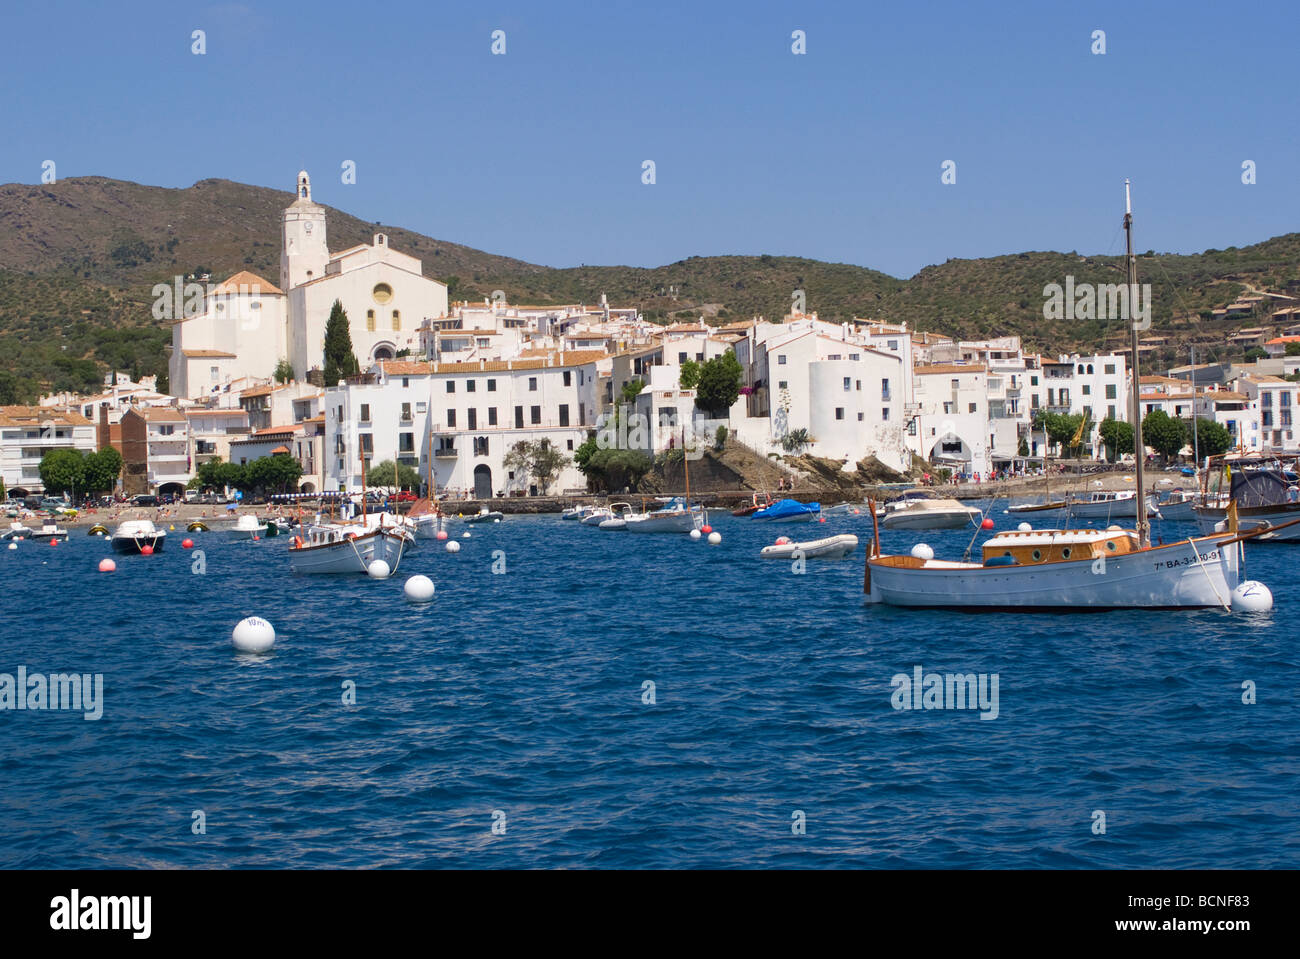 La bella città costiera di Cadaques Cap de Creus Penisola Catalonia Costa Brava Spagna Espana Foto Stock